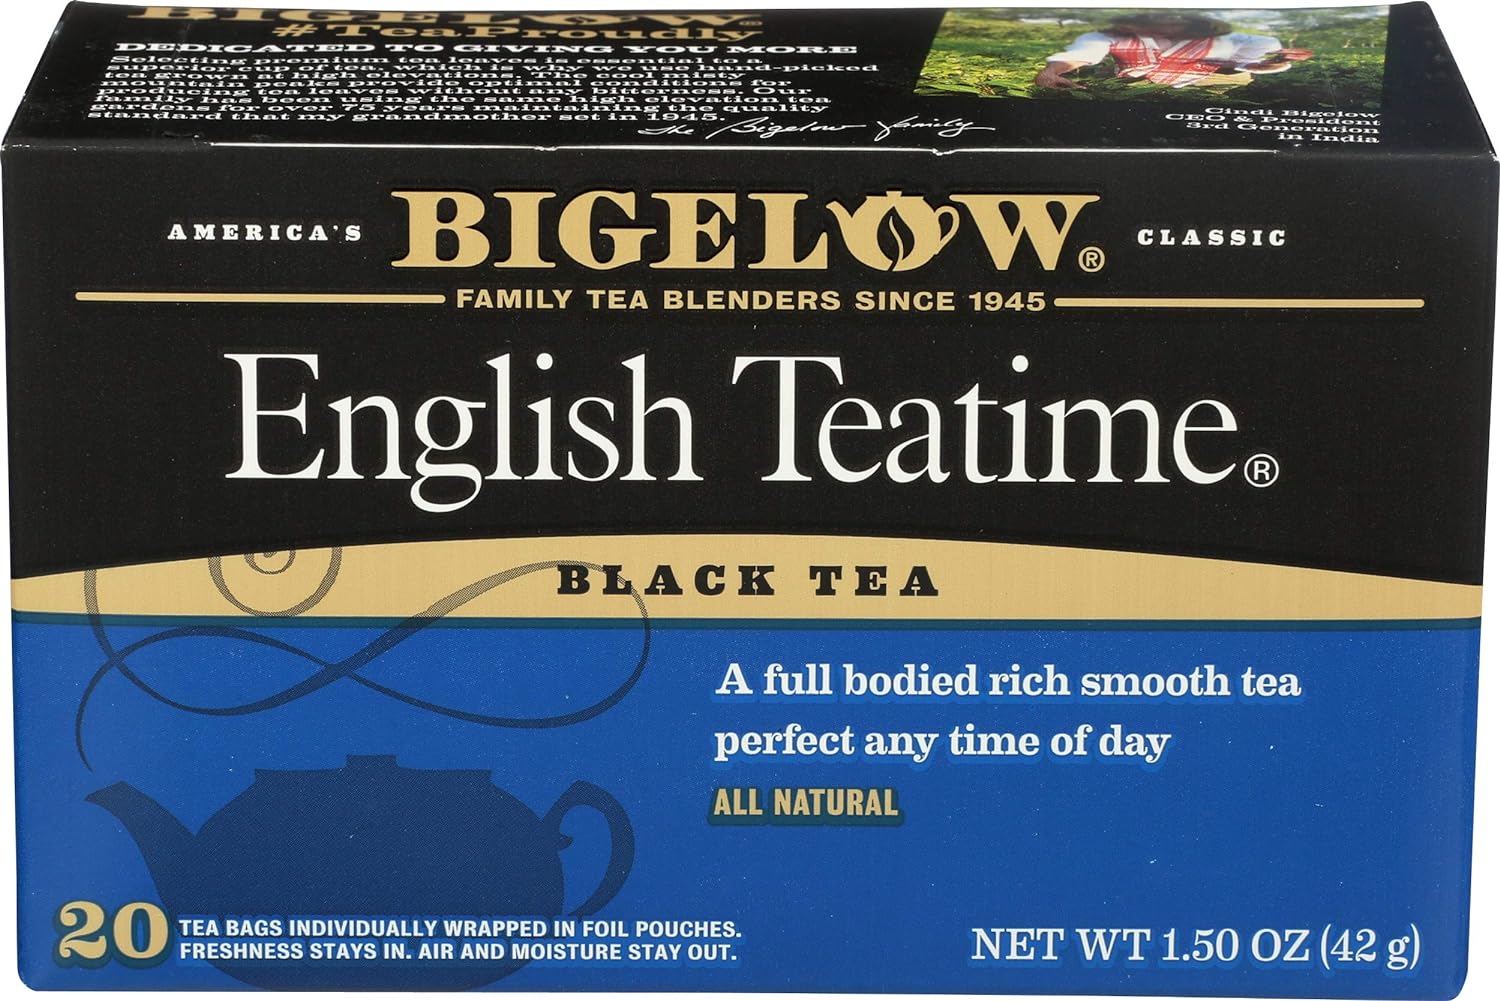 Bigelow English Time Tea Review